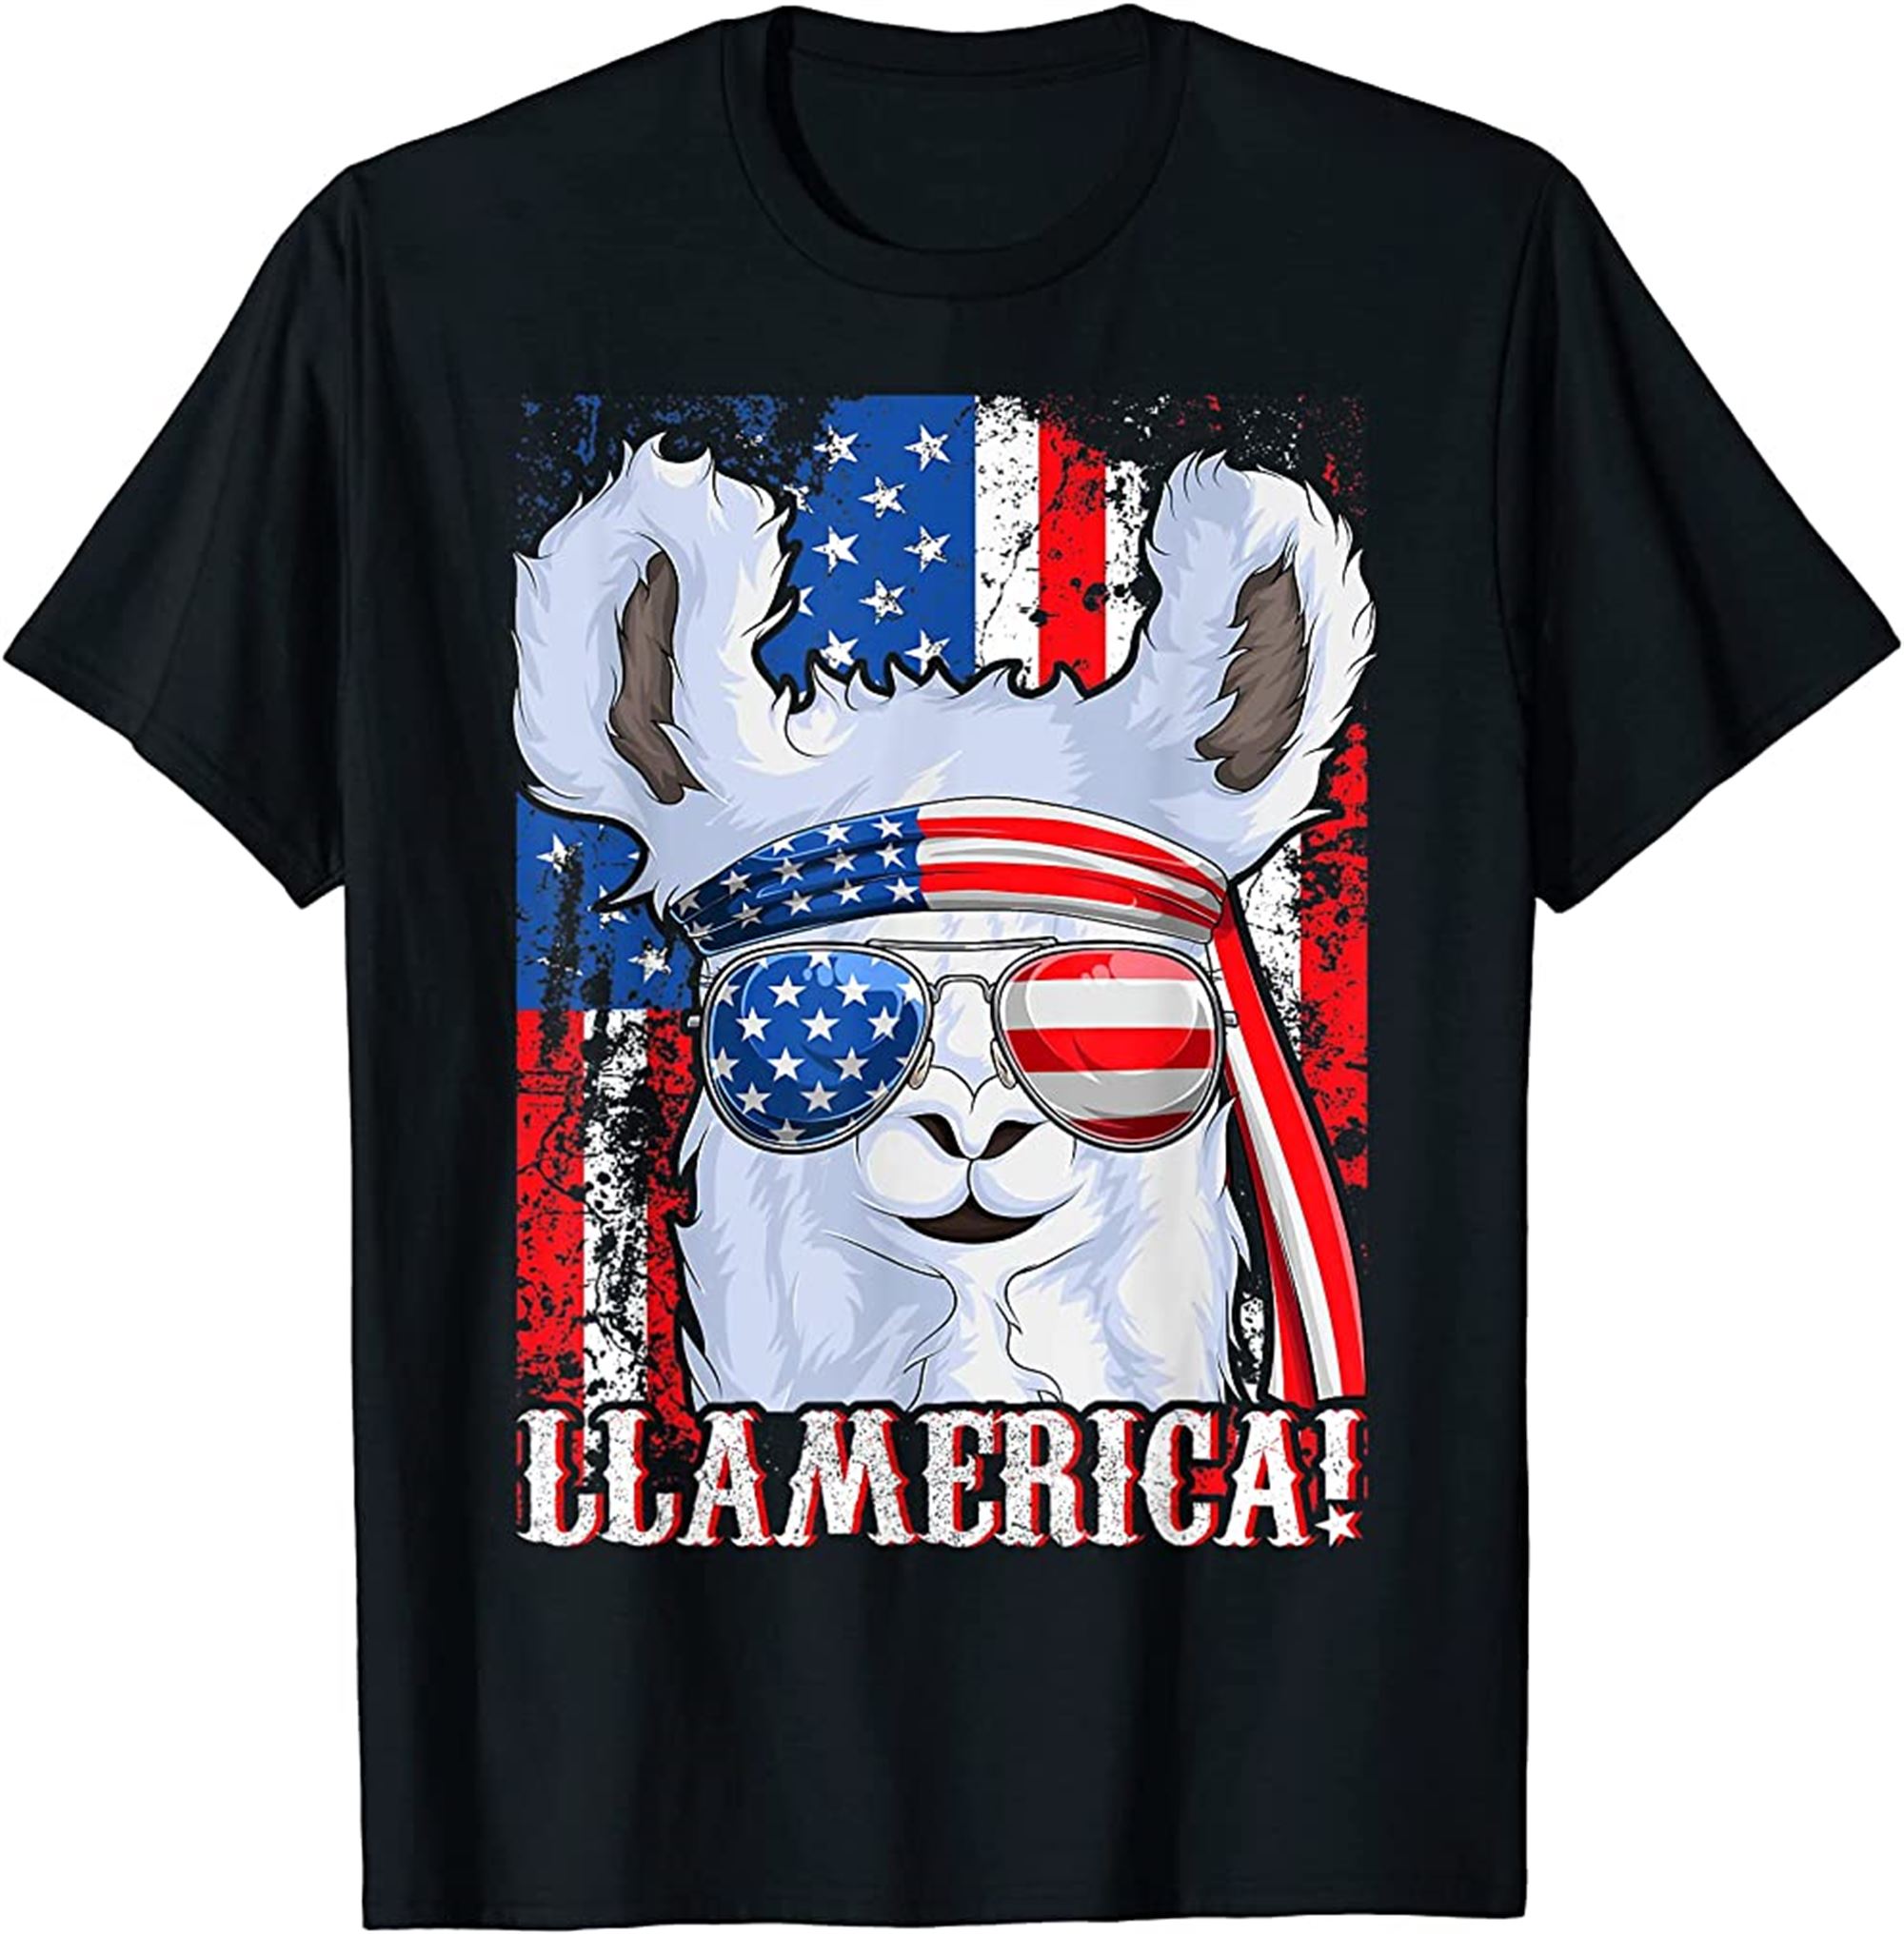 Llama American Flag Shirts Women Girl 4th Of July Llamerica T-shirt Plus Size Up To 5xl